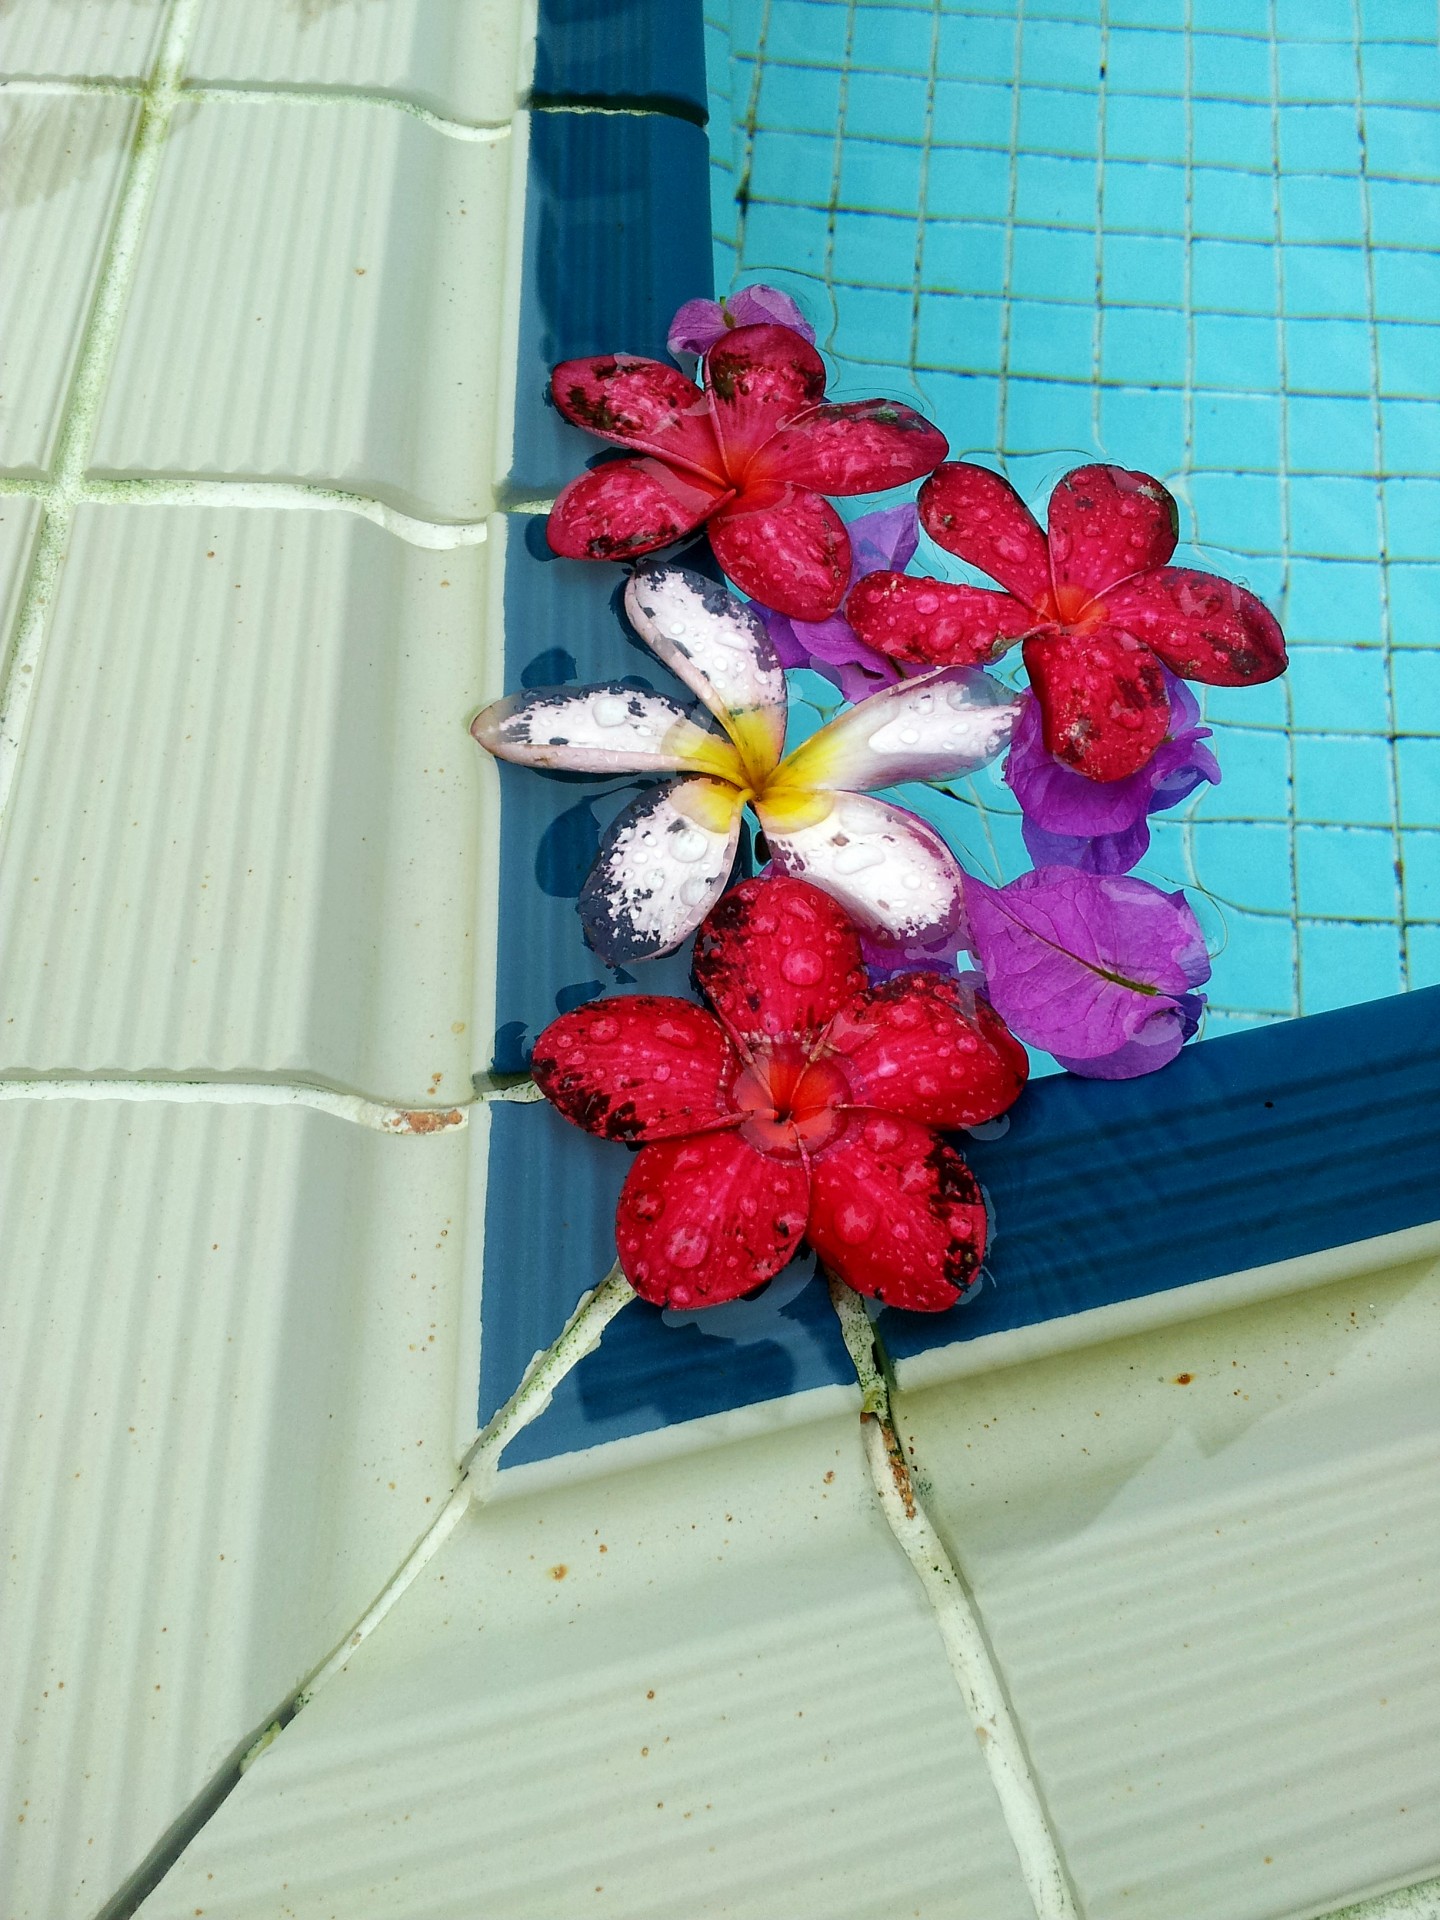 Fallen Flower On The Swimming Pool